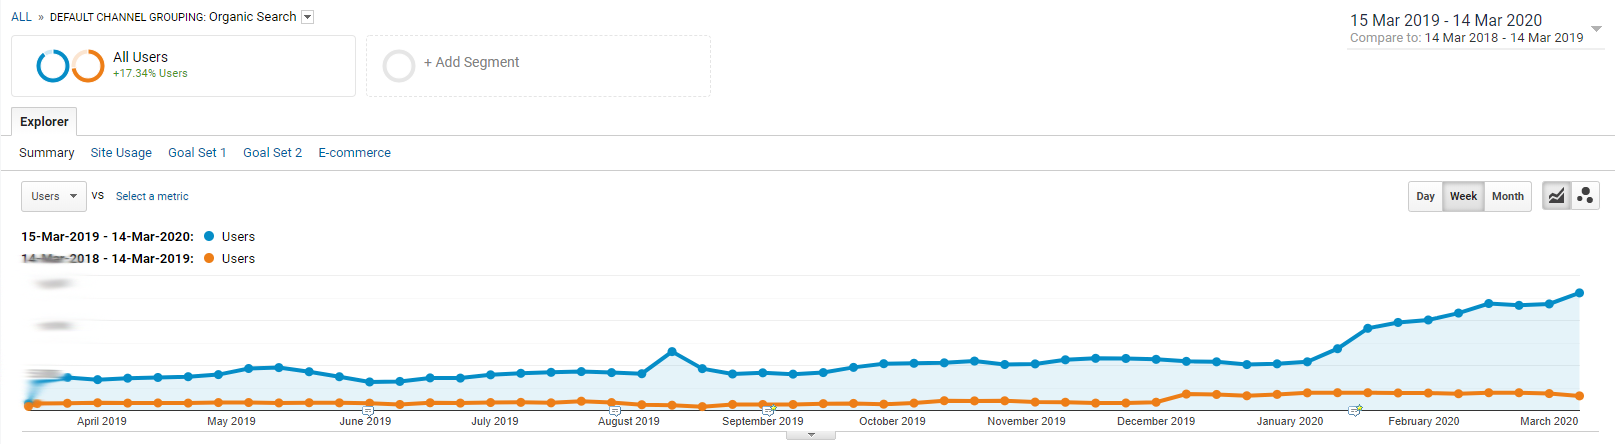 screenshot from analytics that shows the organic traffic grow